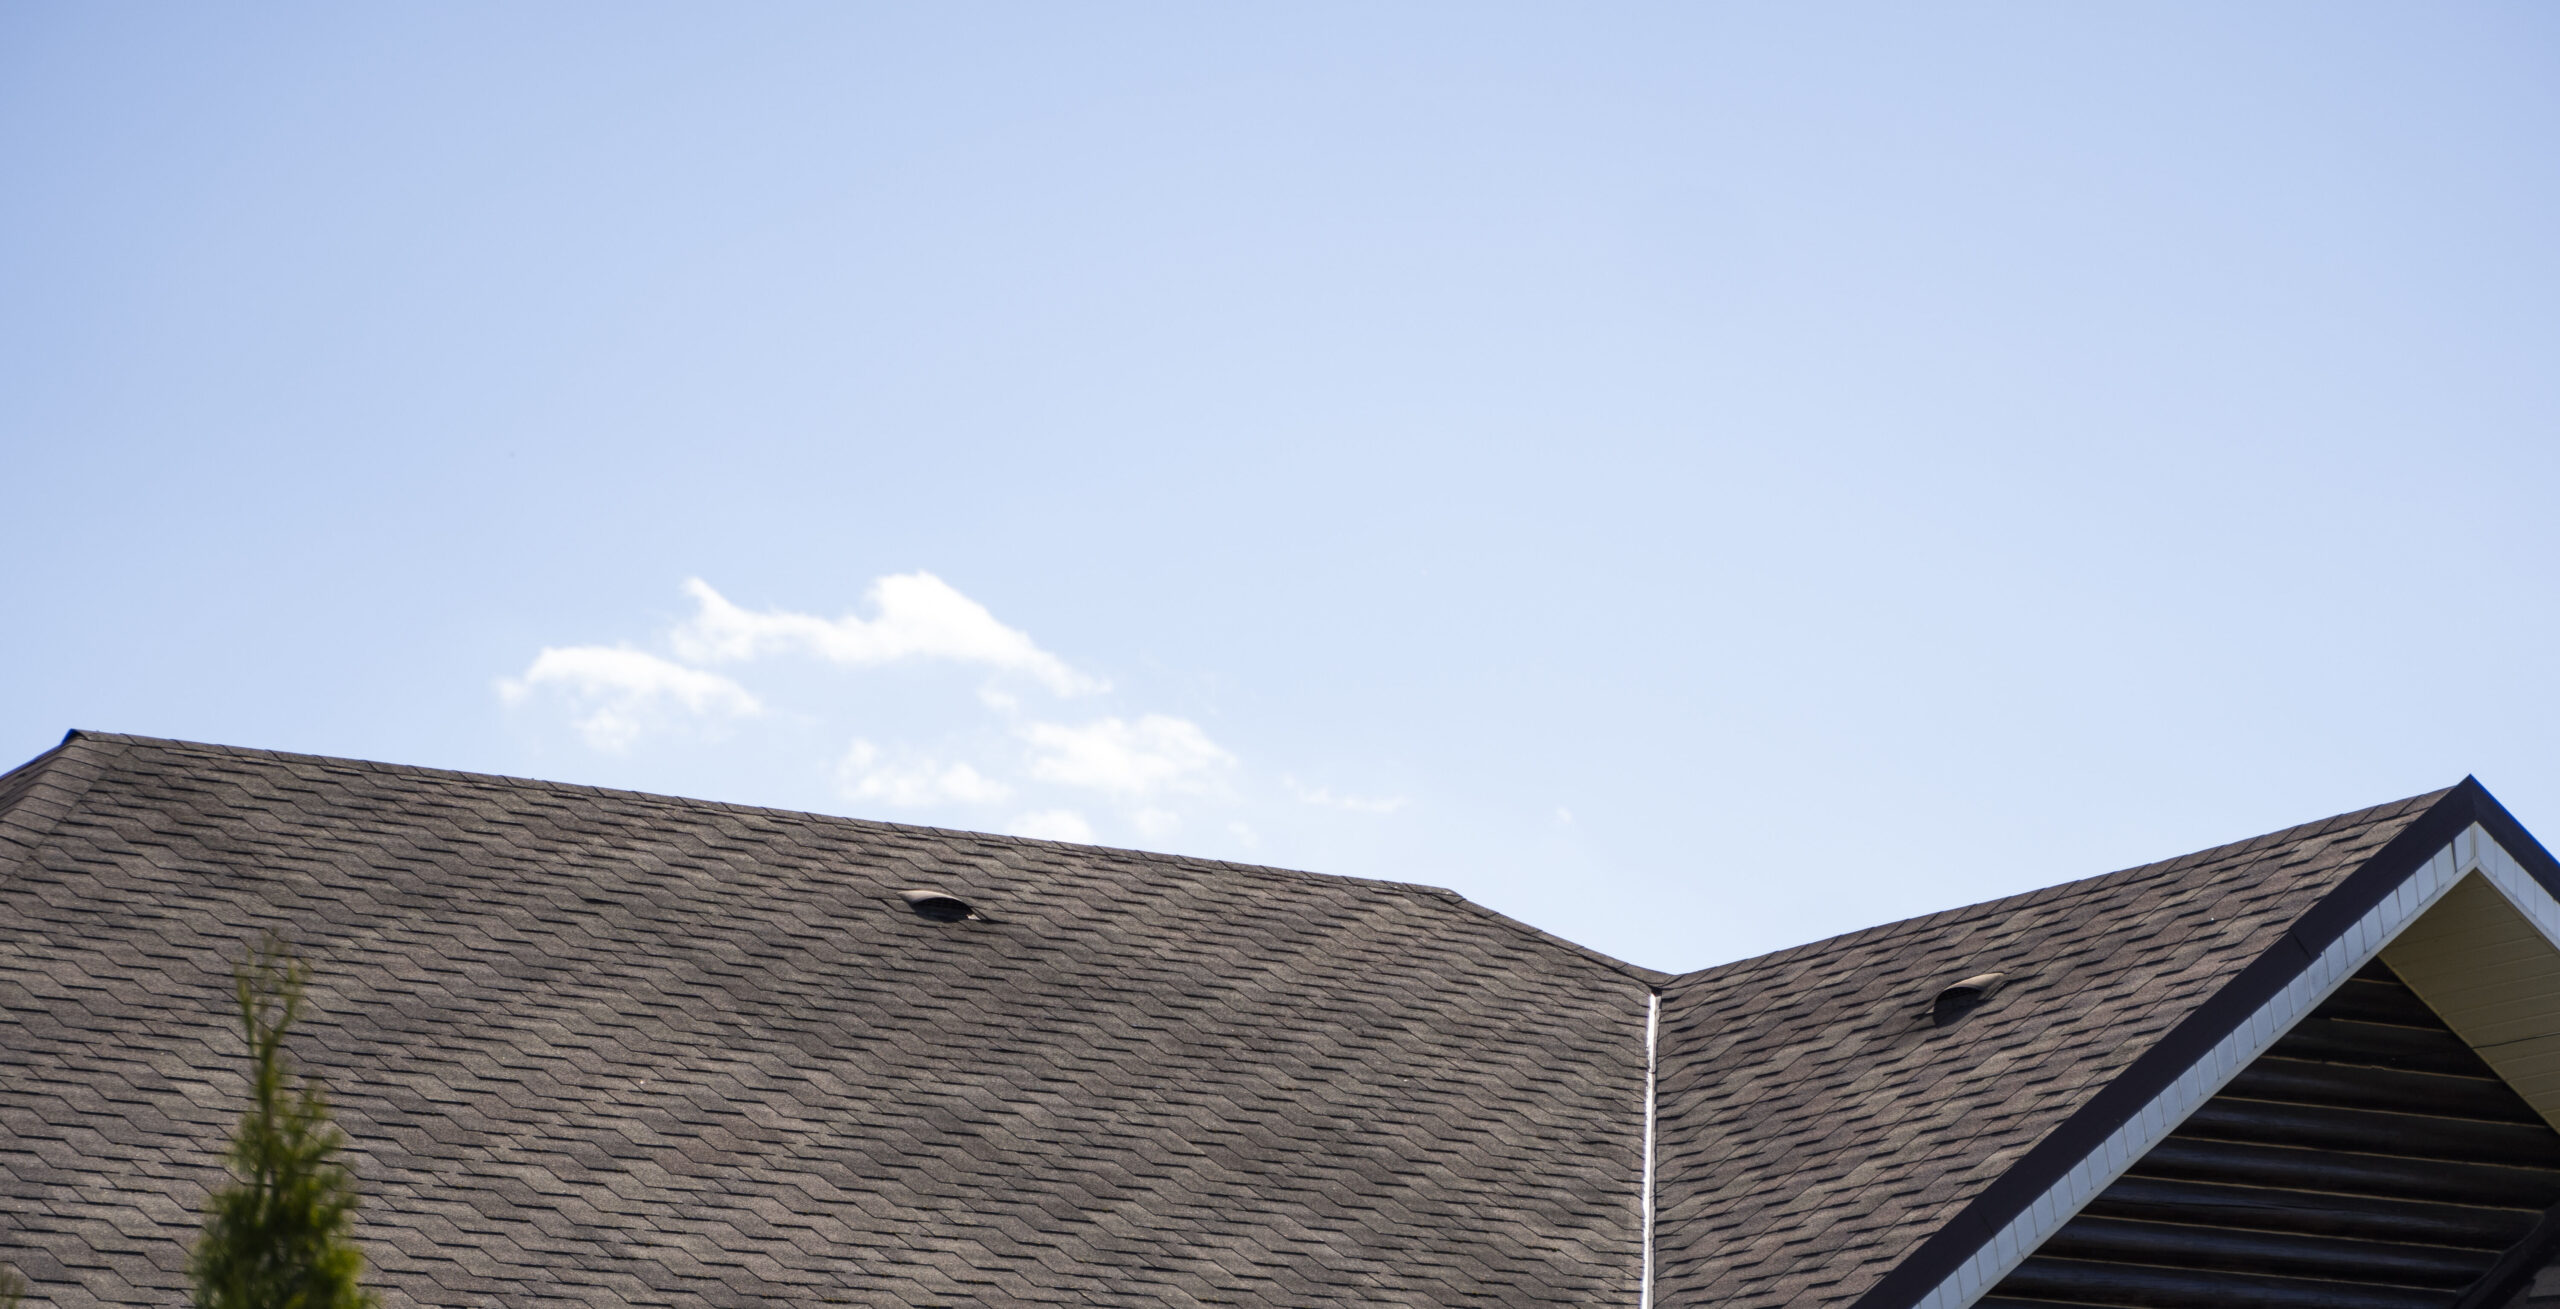 A new asphalt shingle roof on a home in Missouri